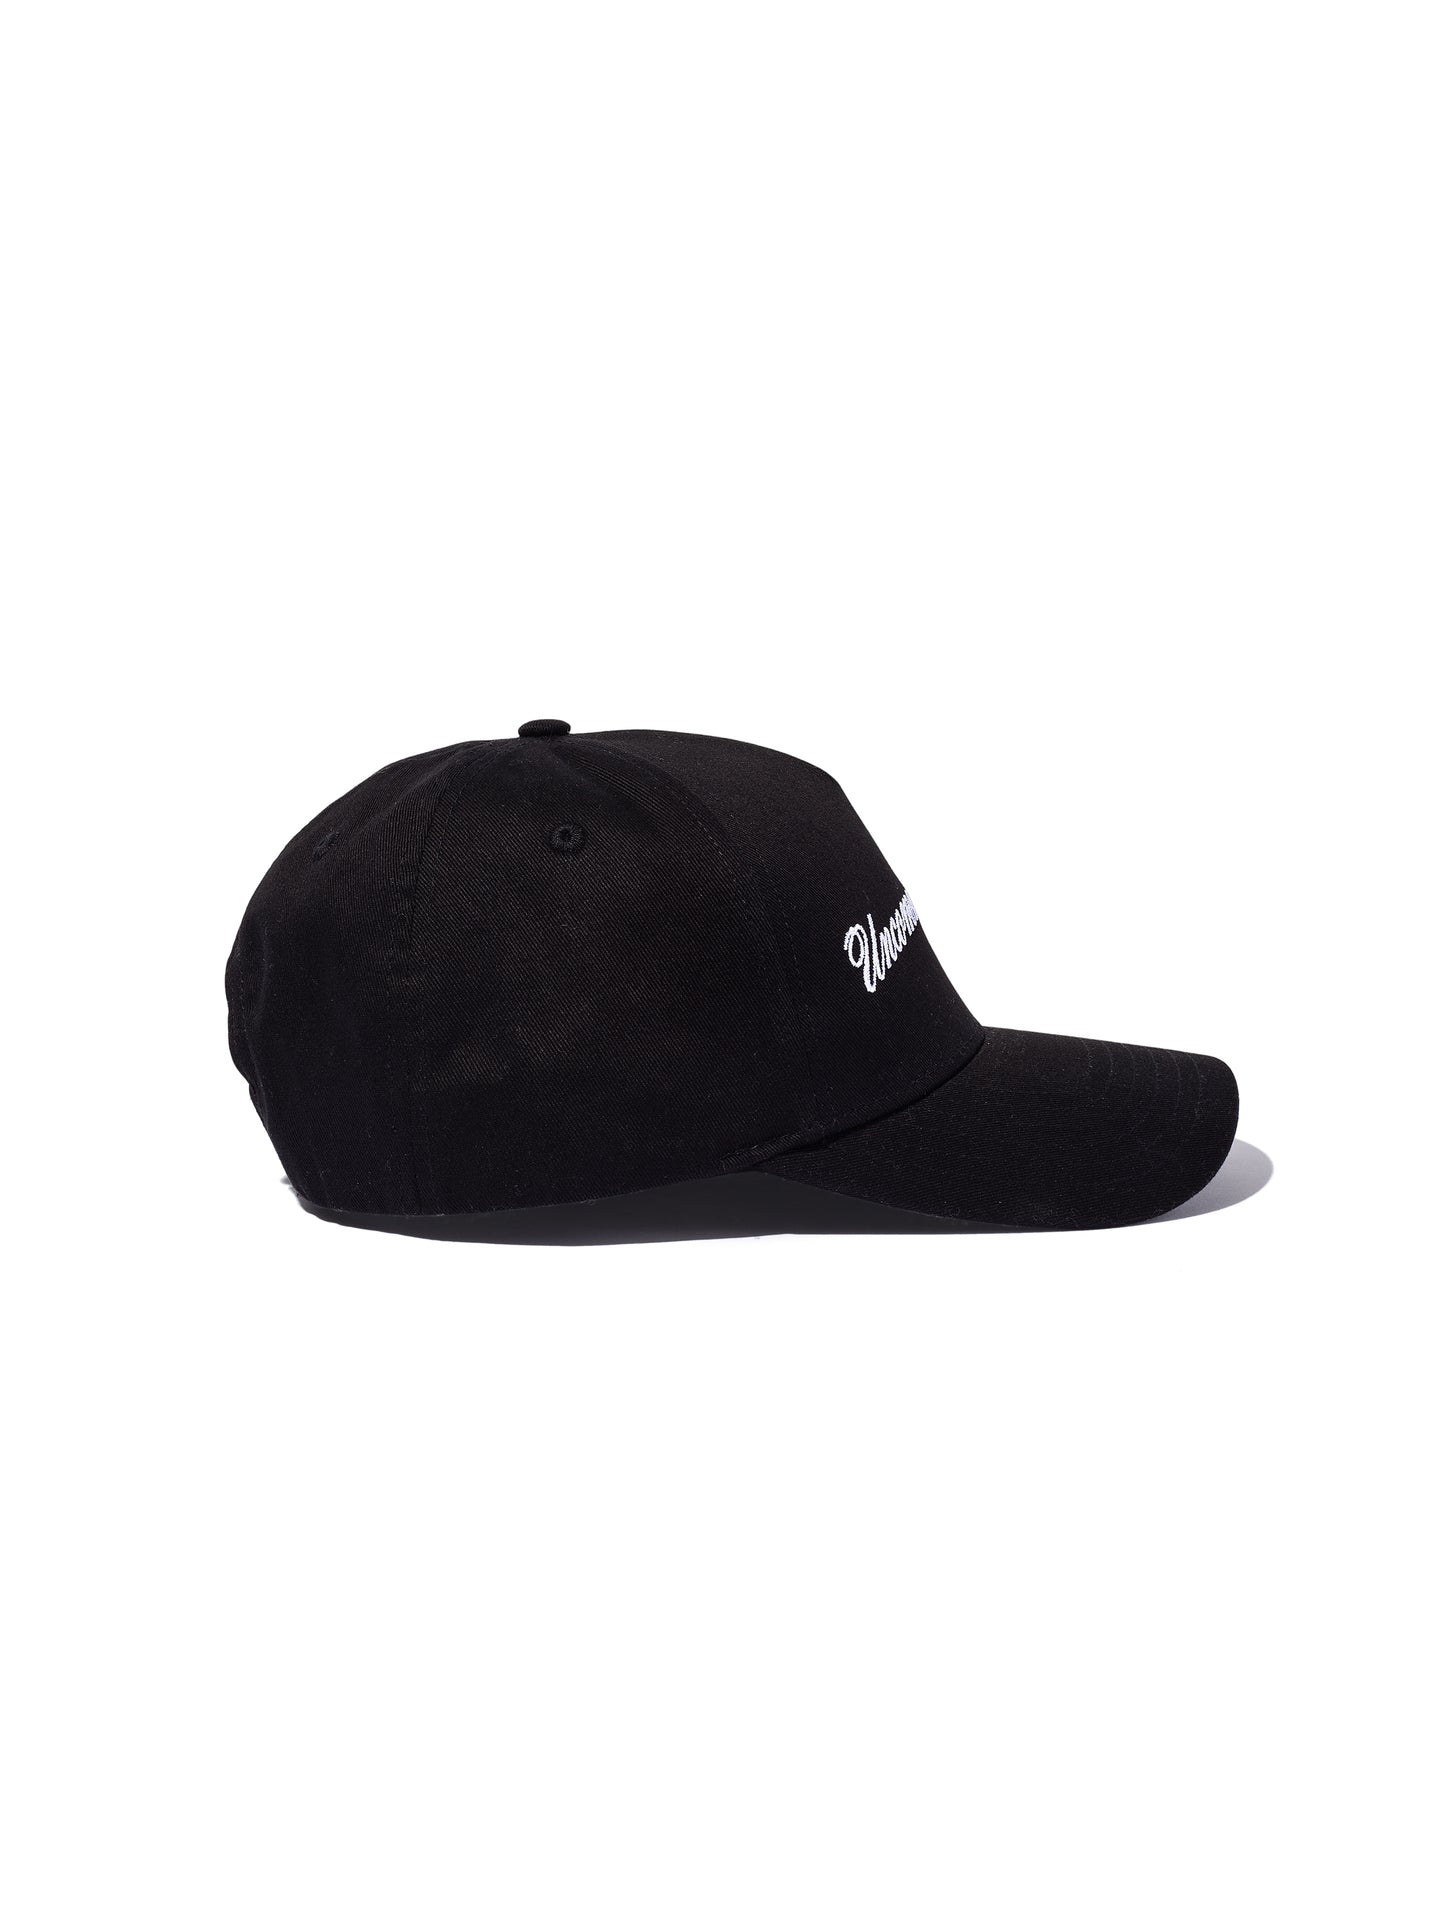 UJ Girl Trucker Hat | Black | Product Detail Image | Uncommon Lifestyle